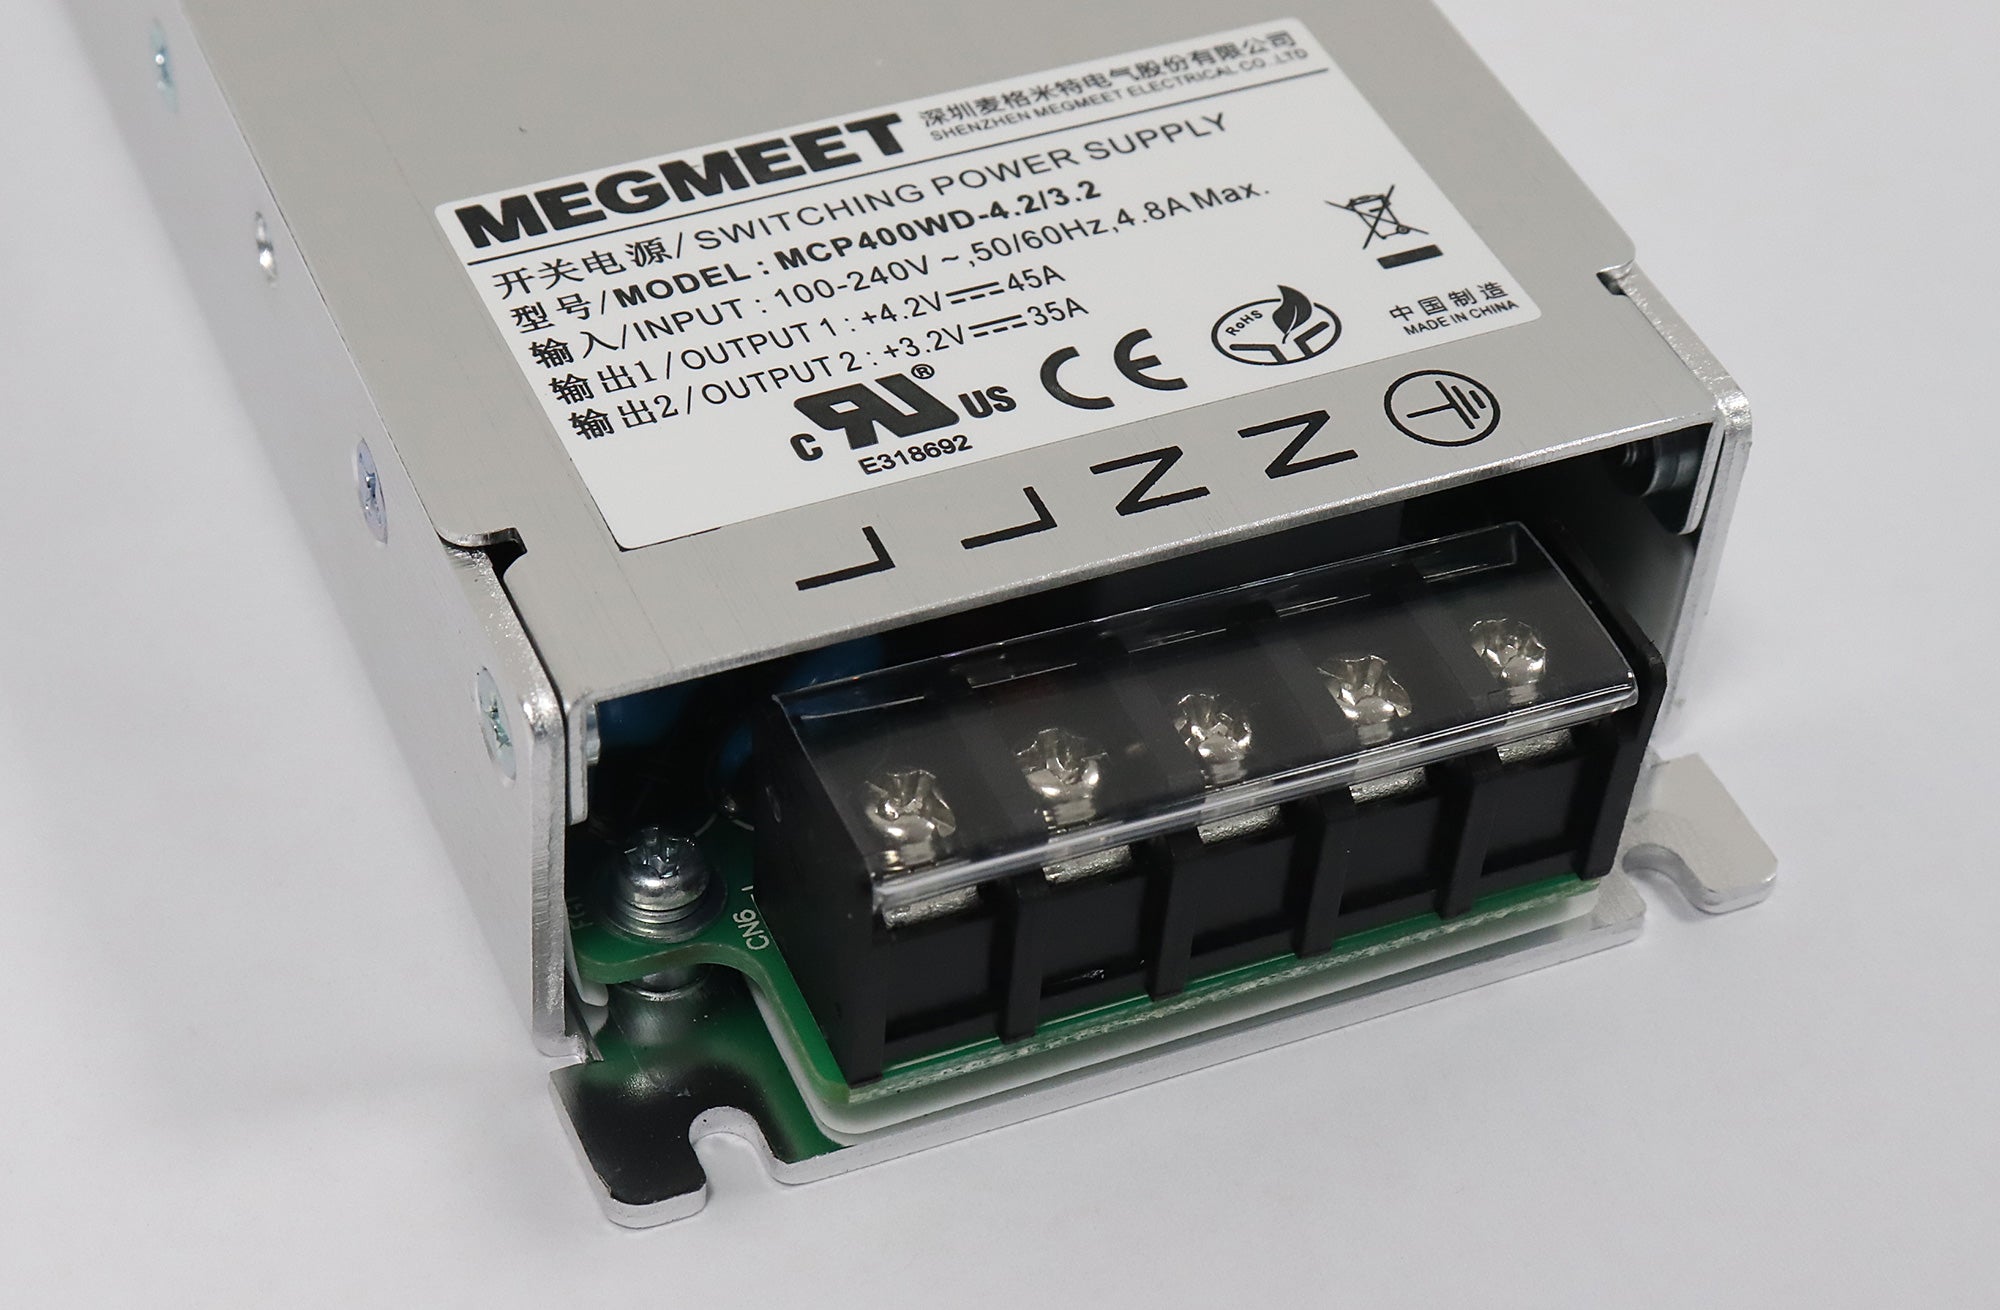 Megmeet MCP400WD-4.2/3.2 LED Screen Power Supply